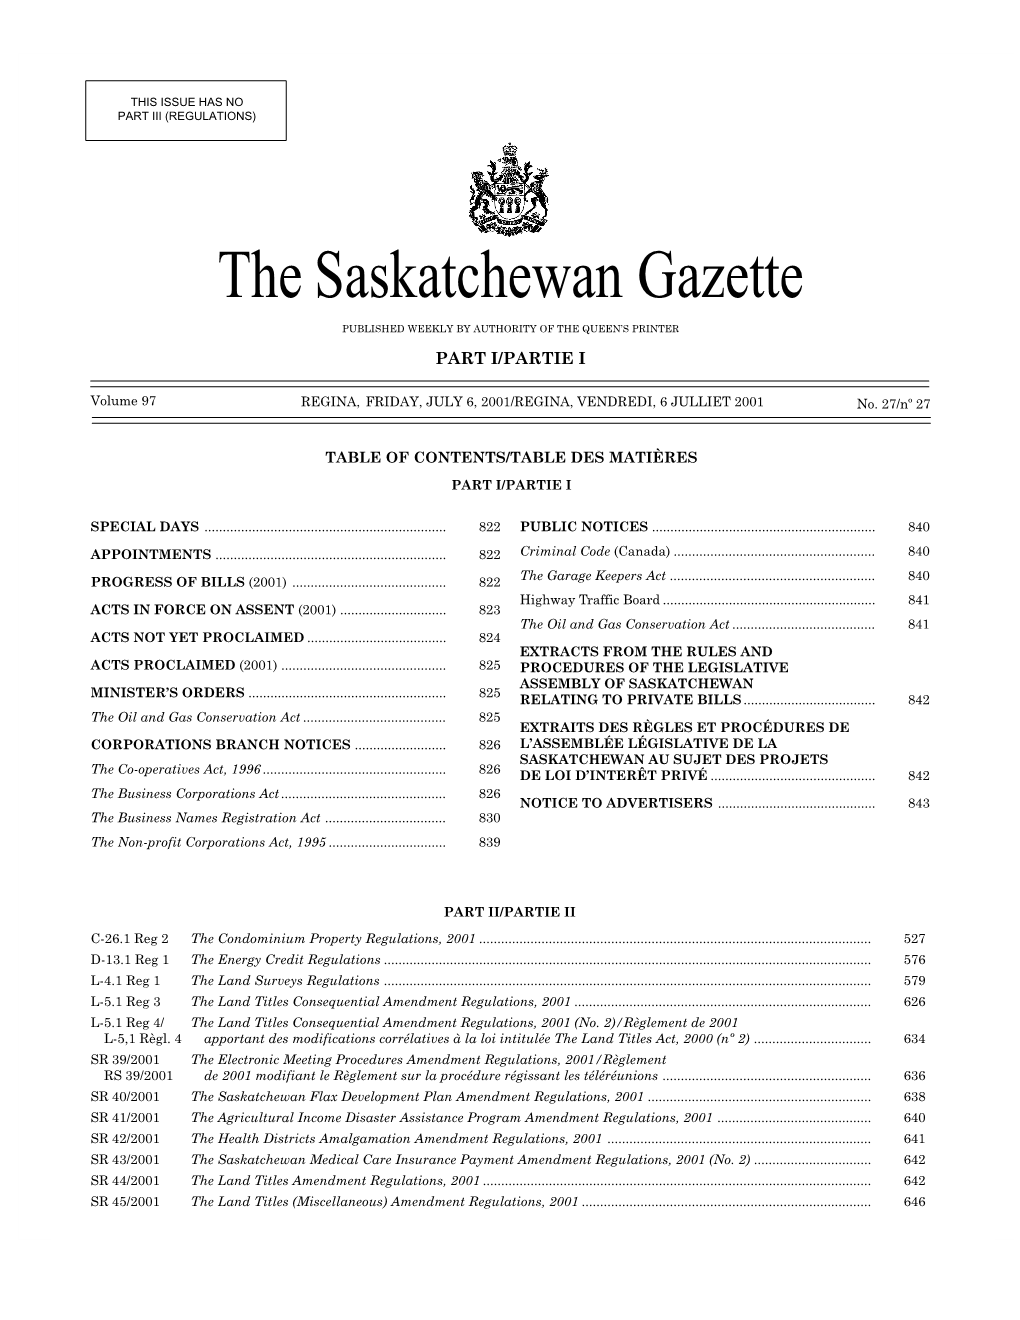 Saskatchewan-Electronic Interception Report for 2000